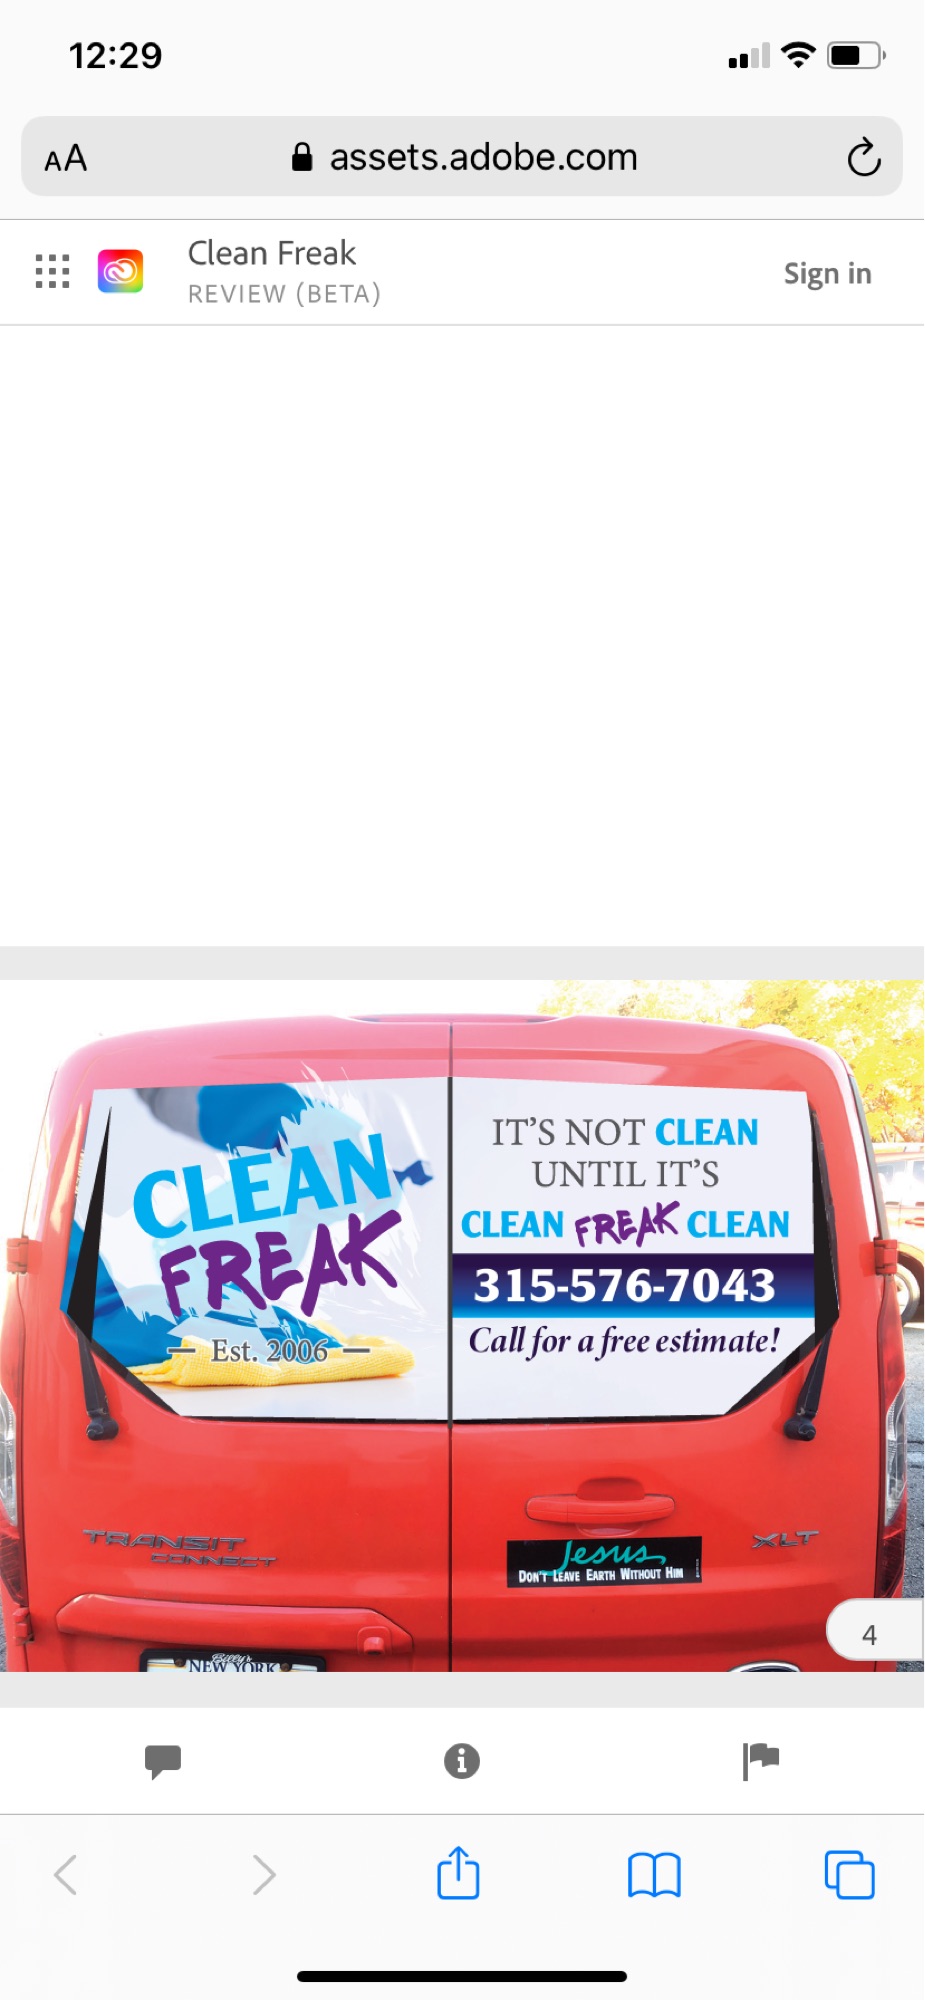 CLEAN FREAK ITS NOT CLEAN UNTIL ITS CLEAN FREAK CLEAN Logo